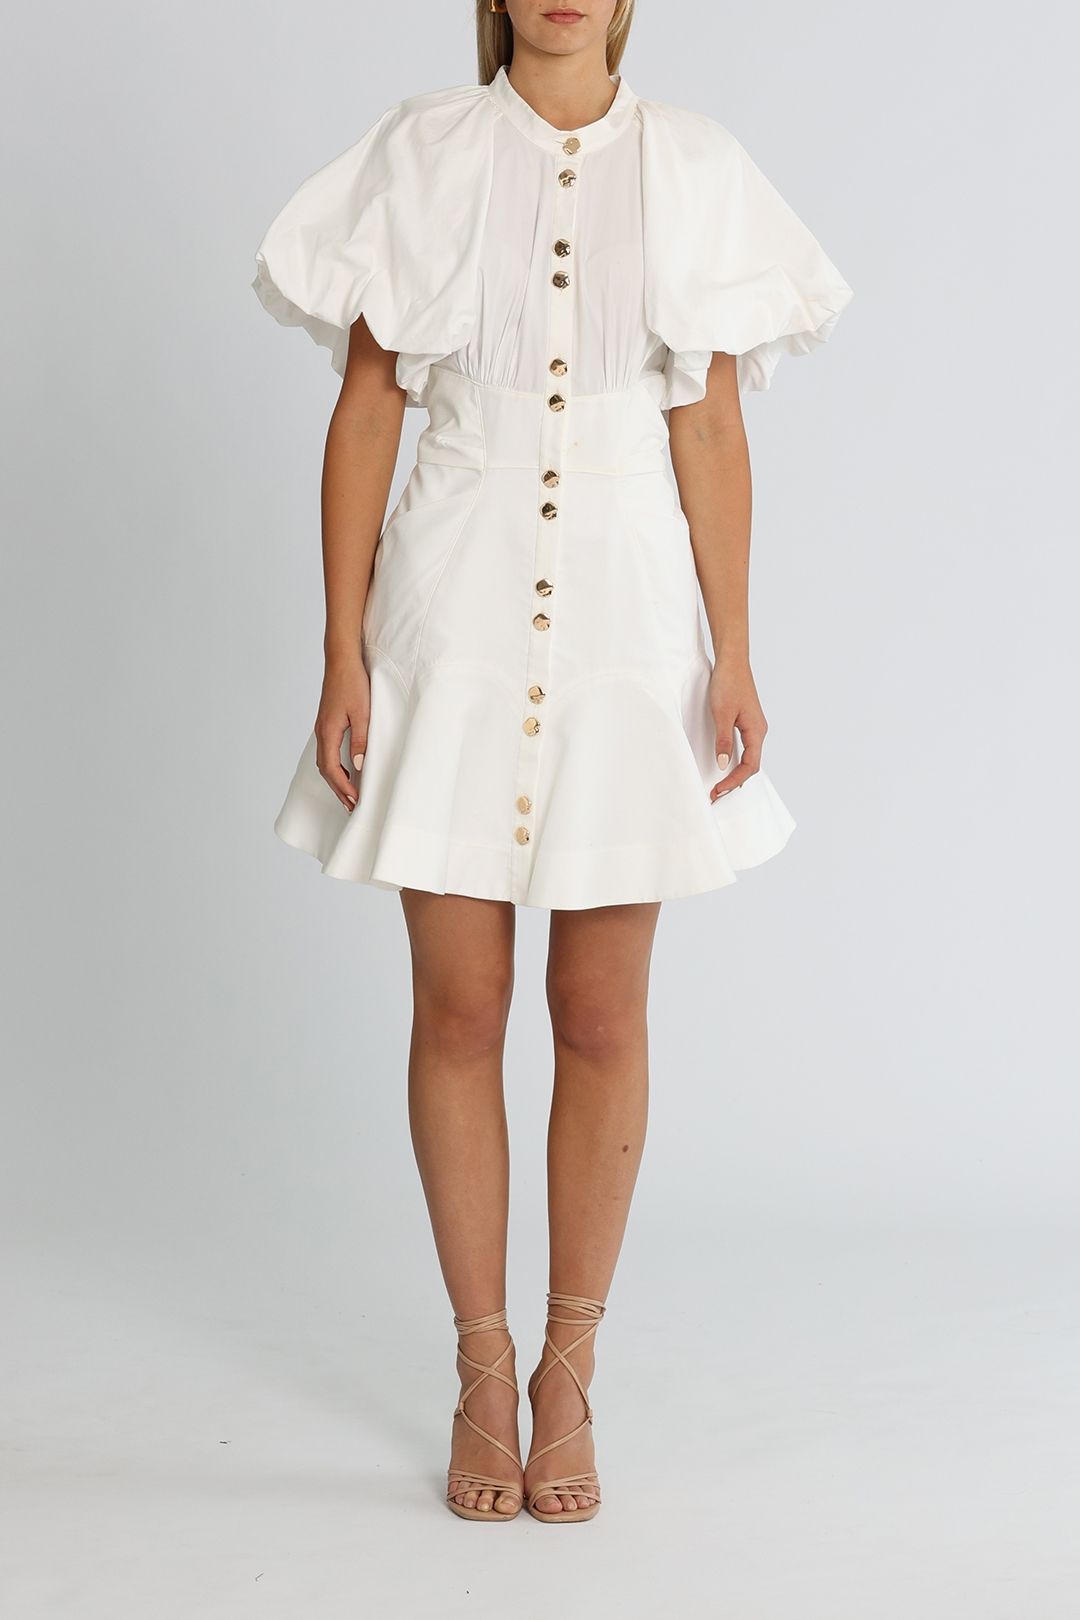 Acler Dalbury Dress White